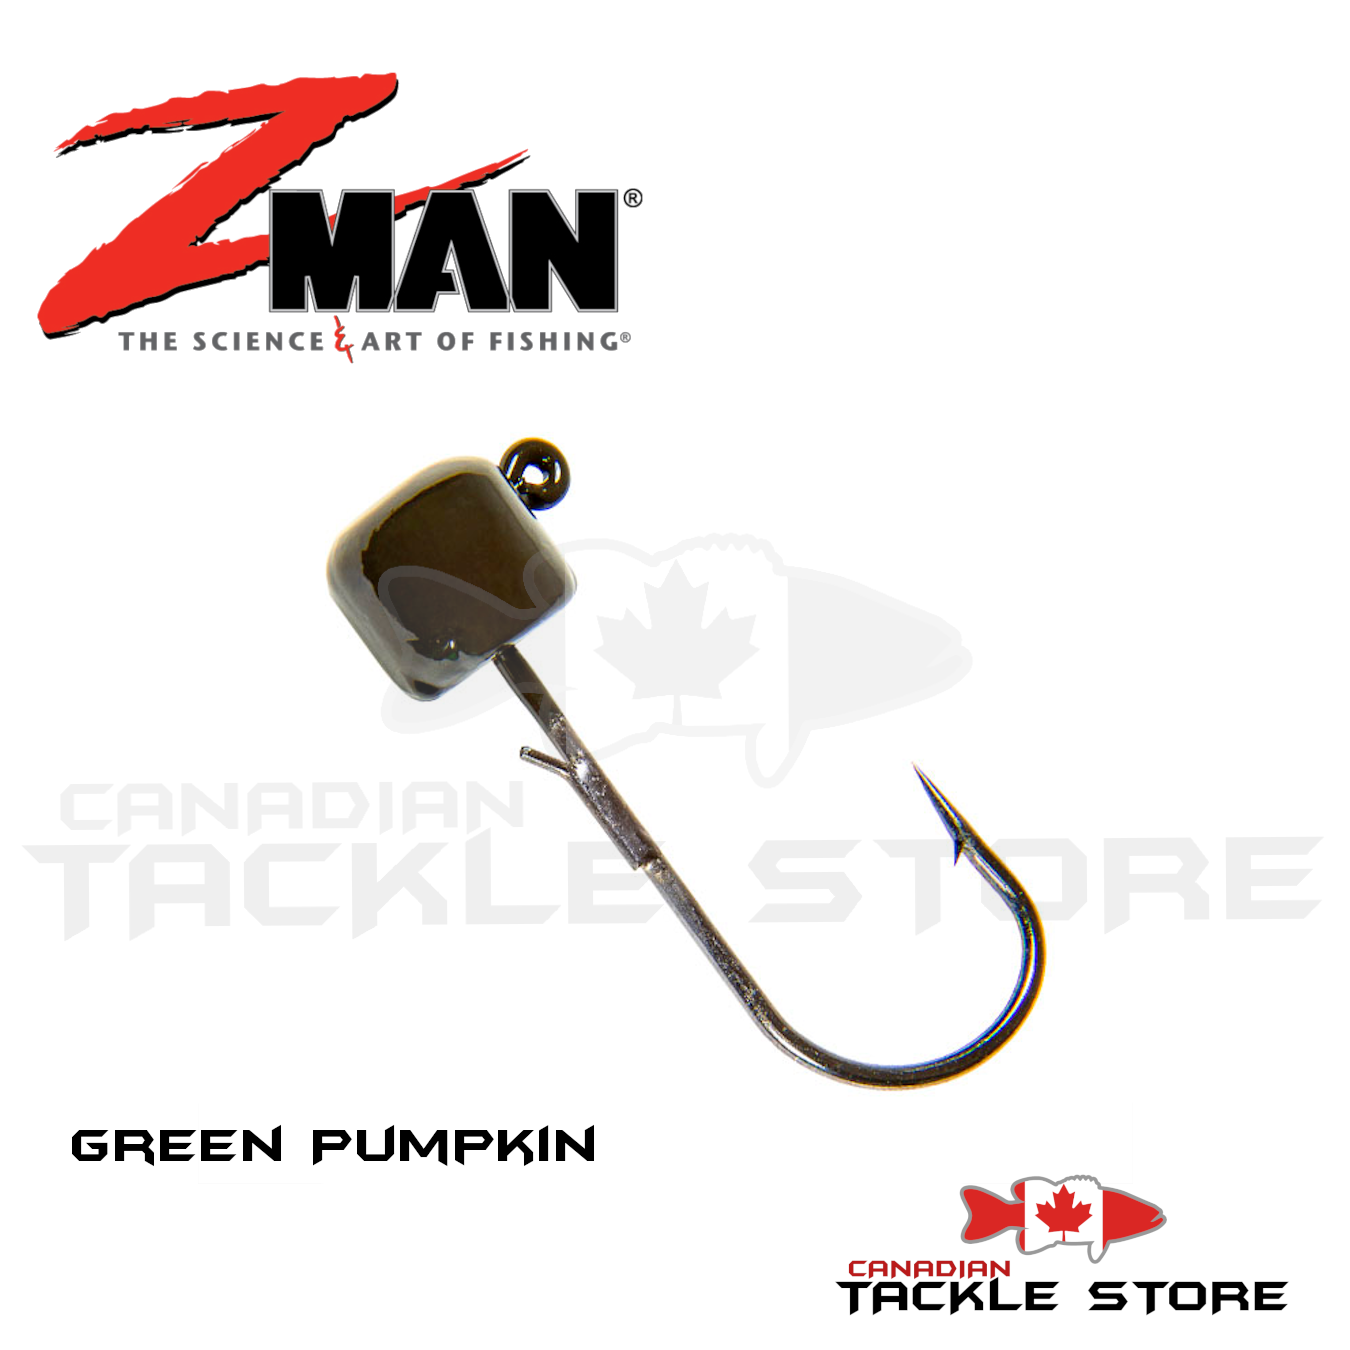 Z-Man Canada  Fishing Tackle Store